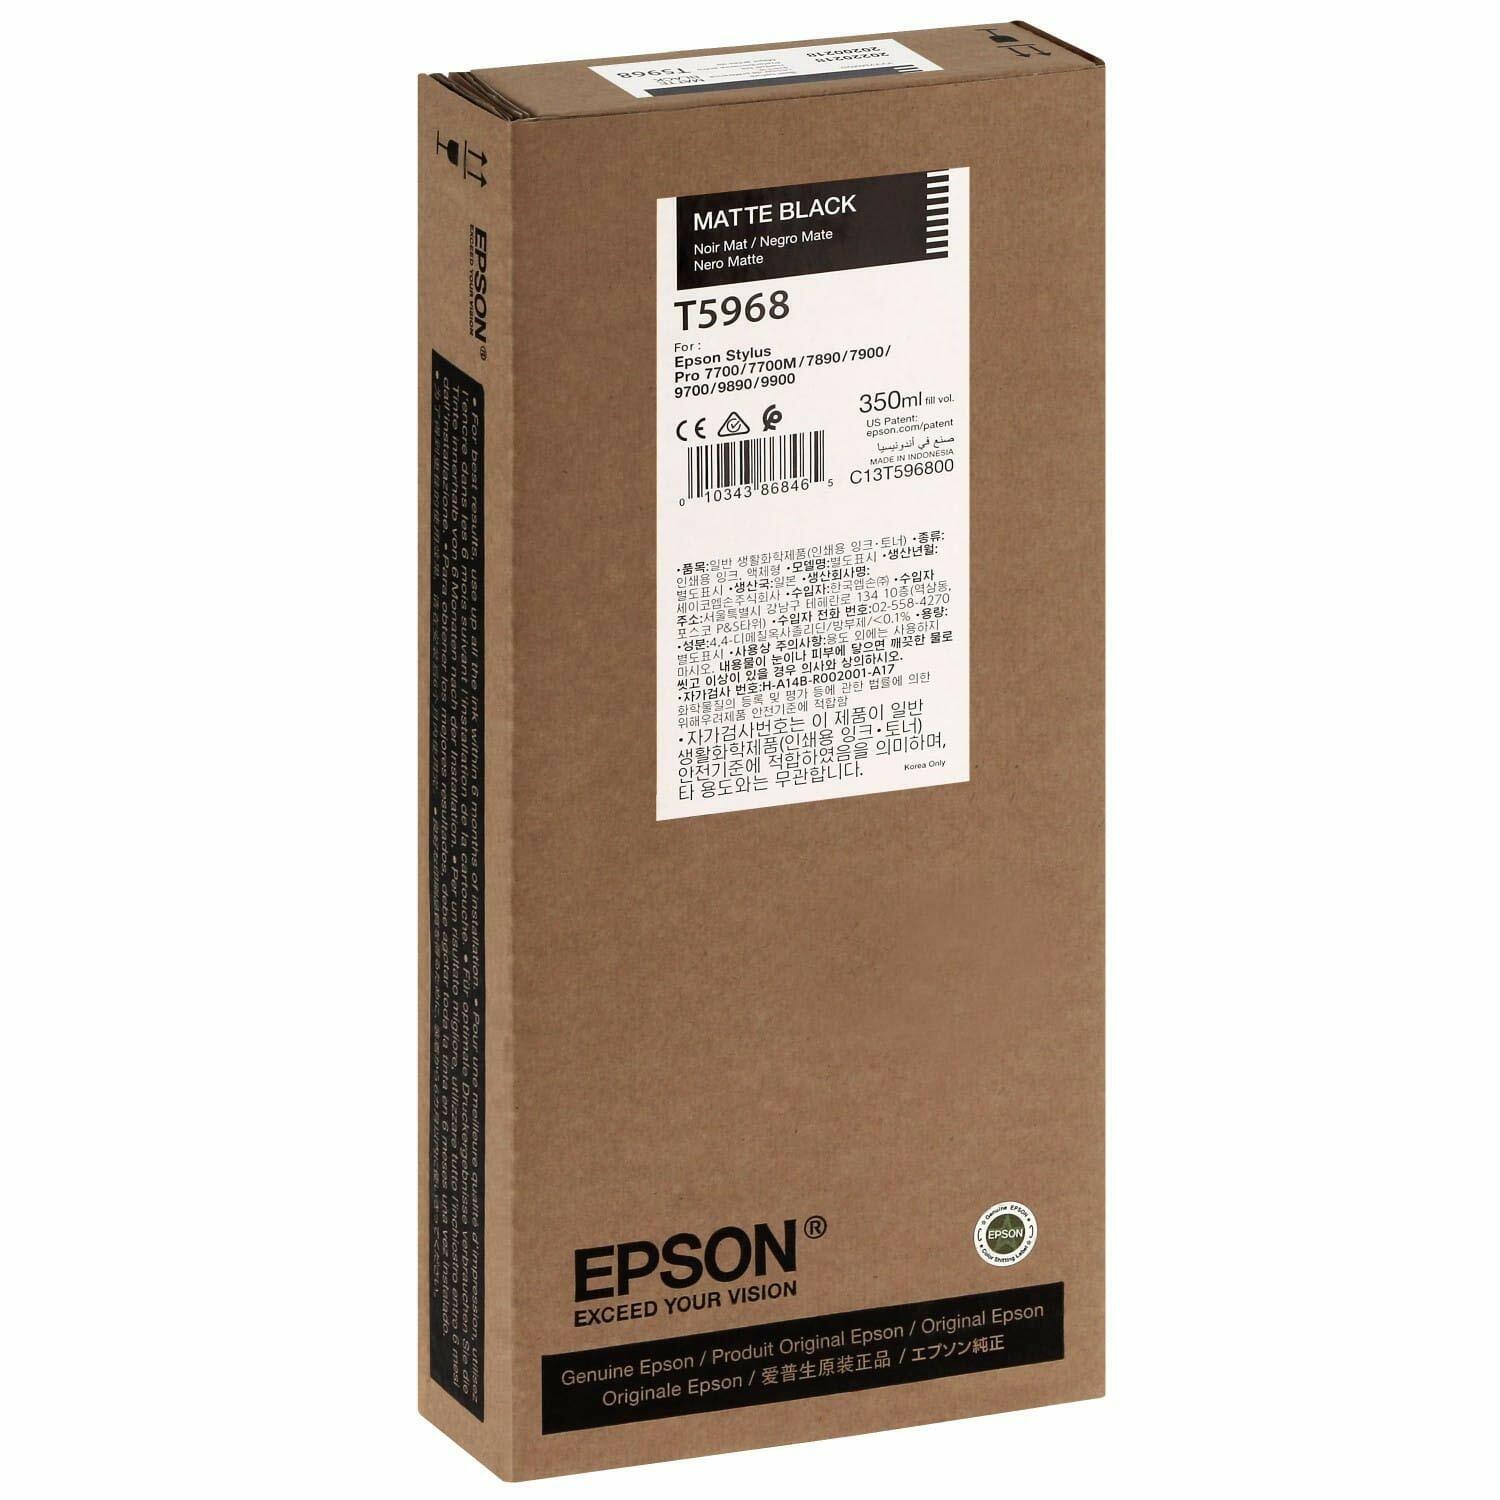 Genuine Epson T5968 Matte Black Ink Cartridge for Stylus Pro 9890 9900 7700 9700